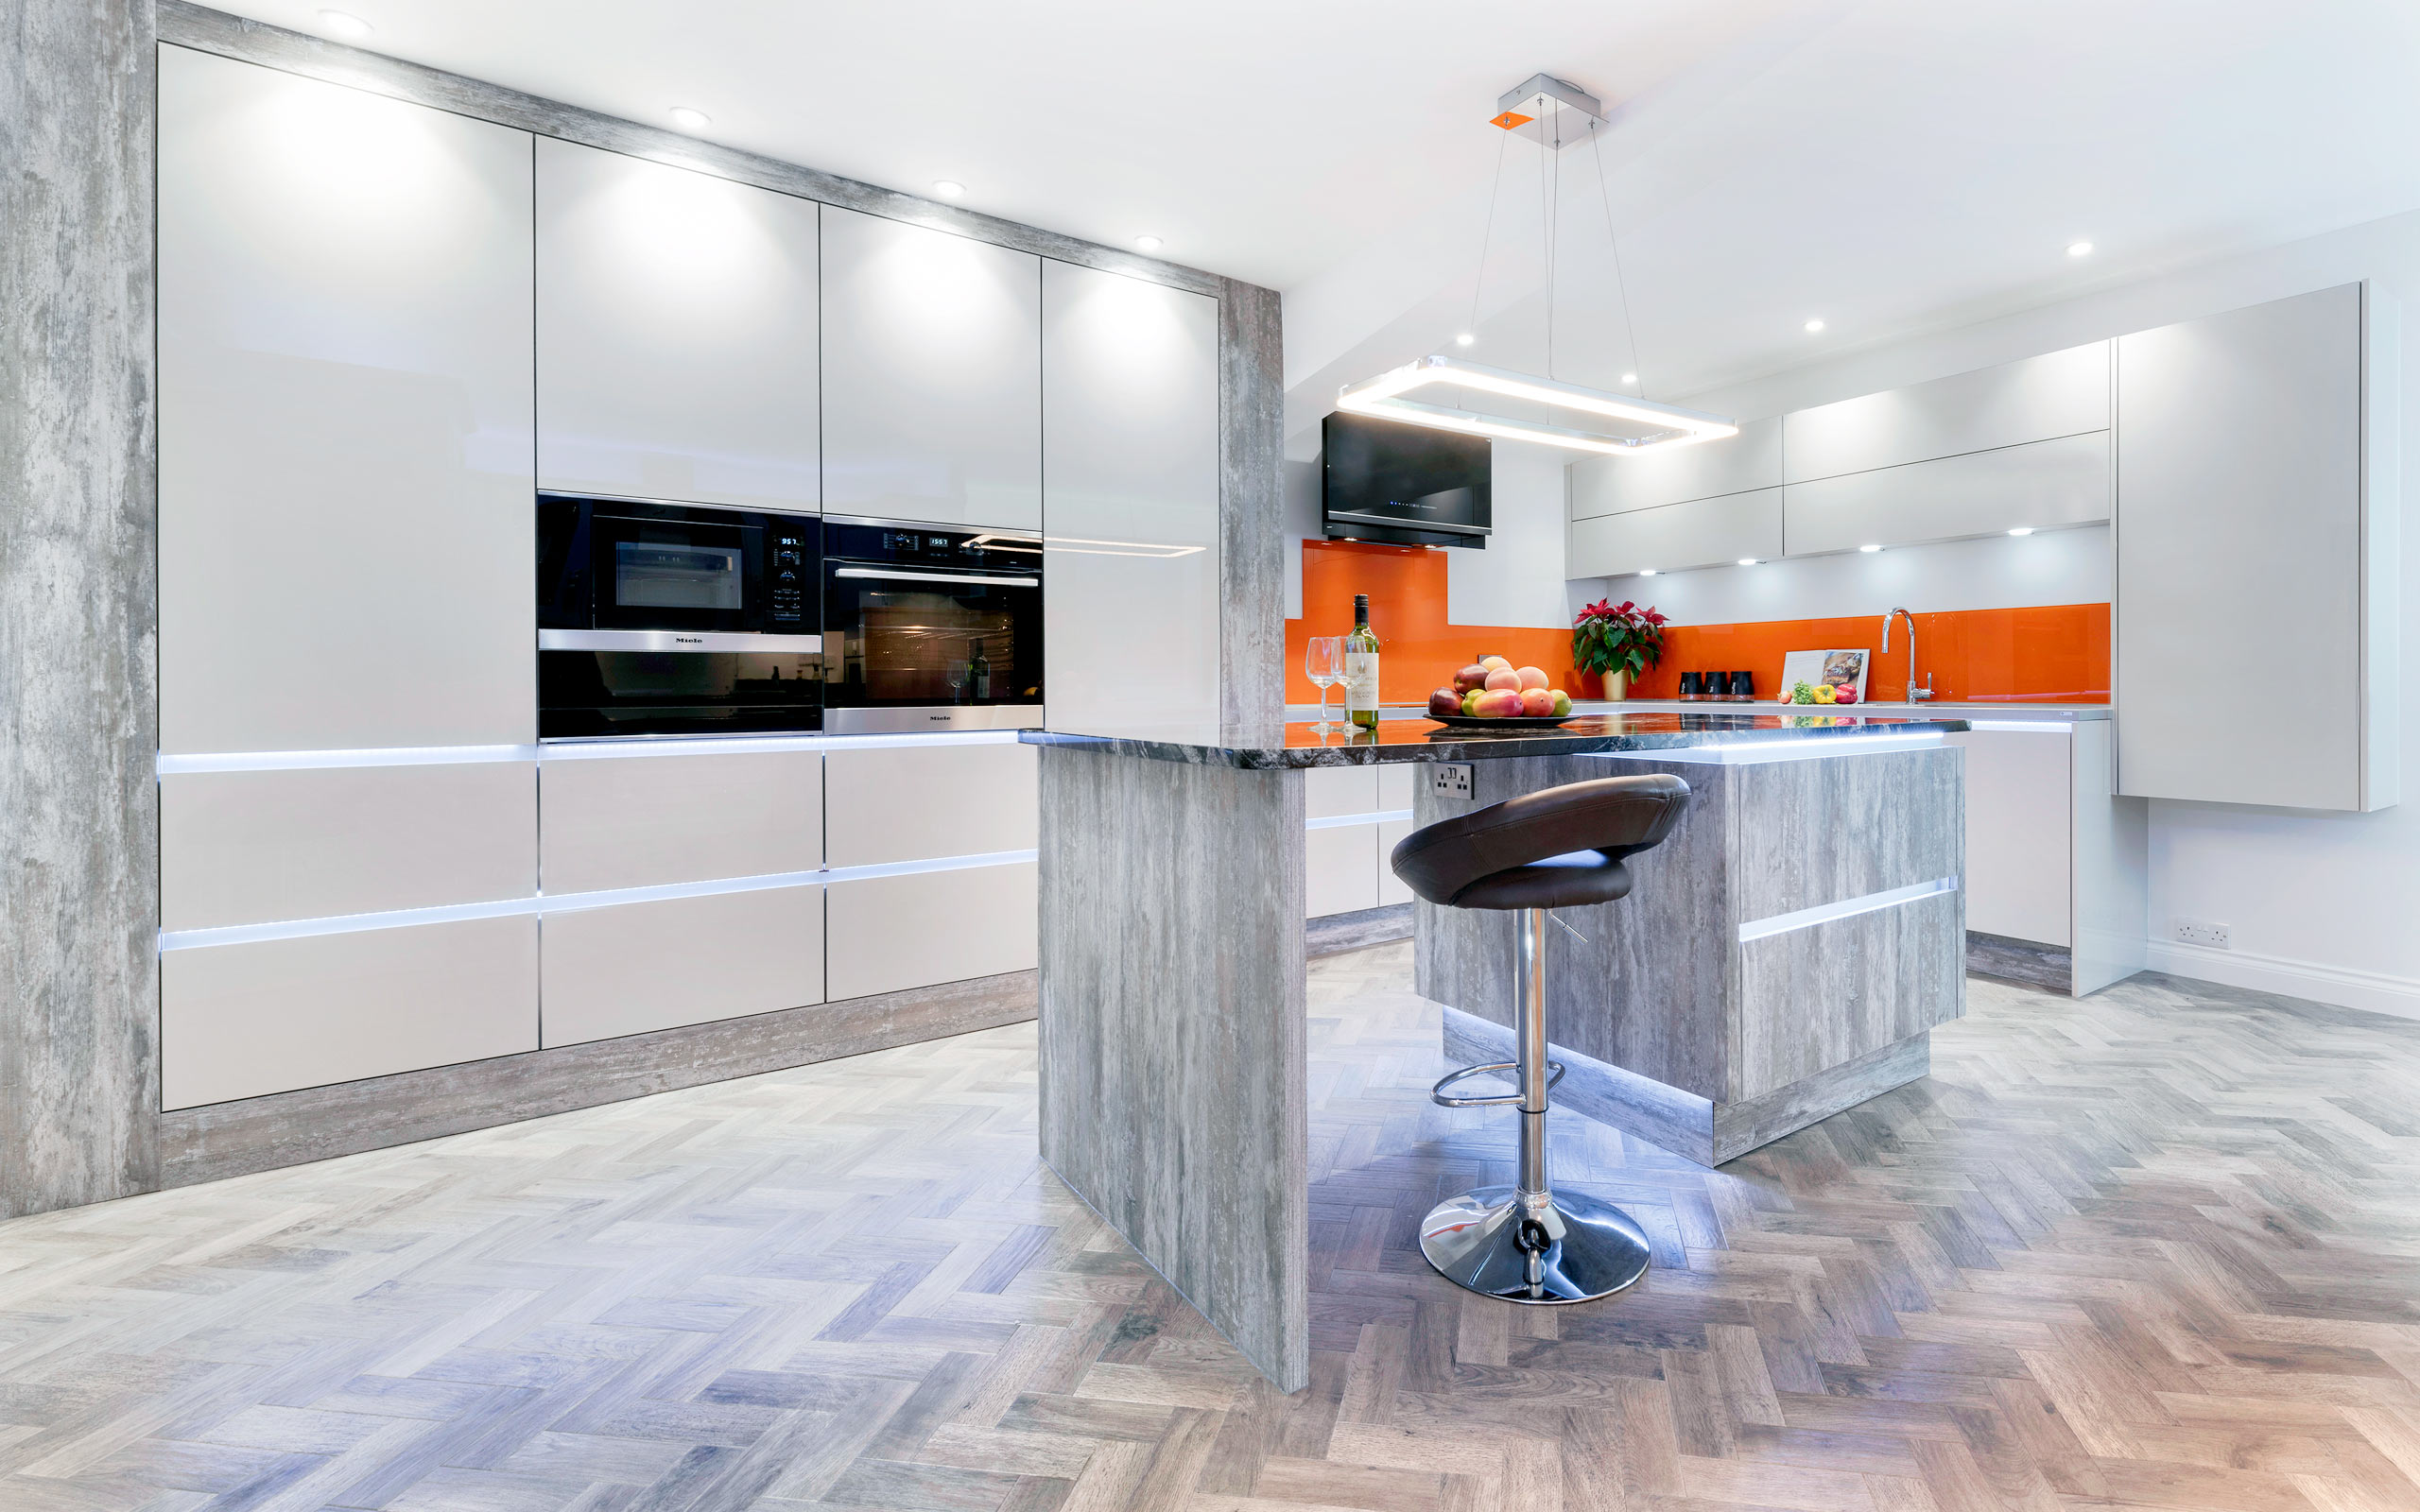 Ashgrove Kitchens Devon - Contemporary Kitchen Design and Build Image 55